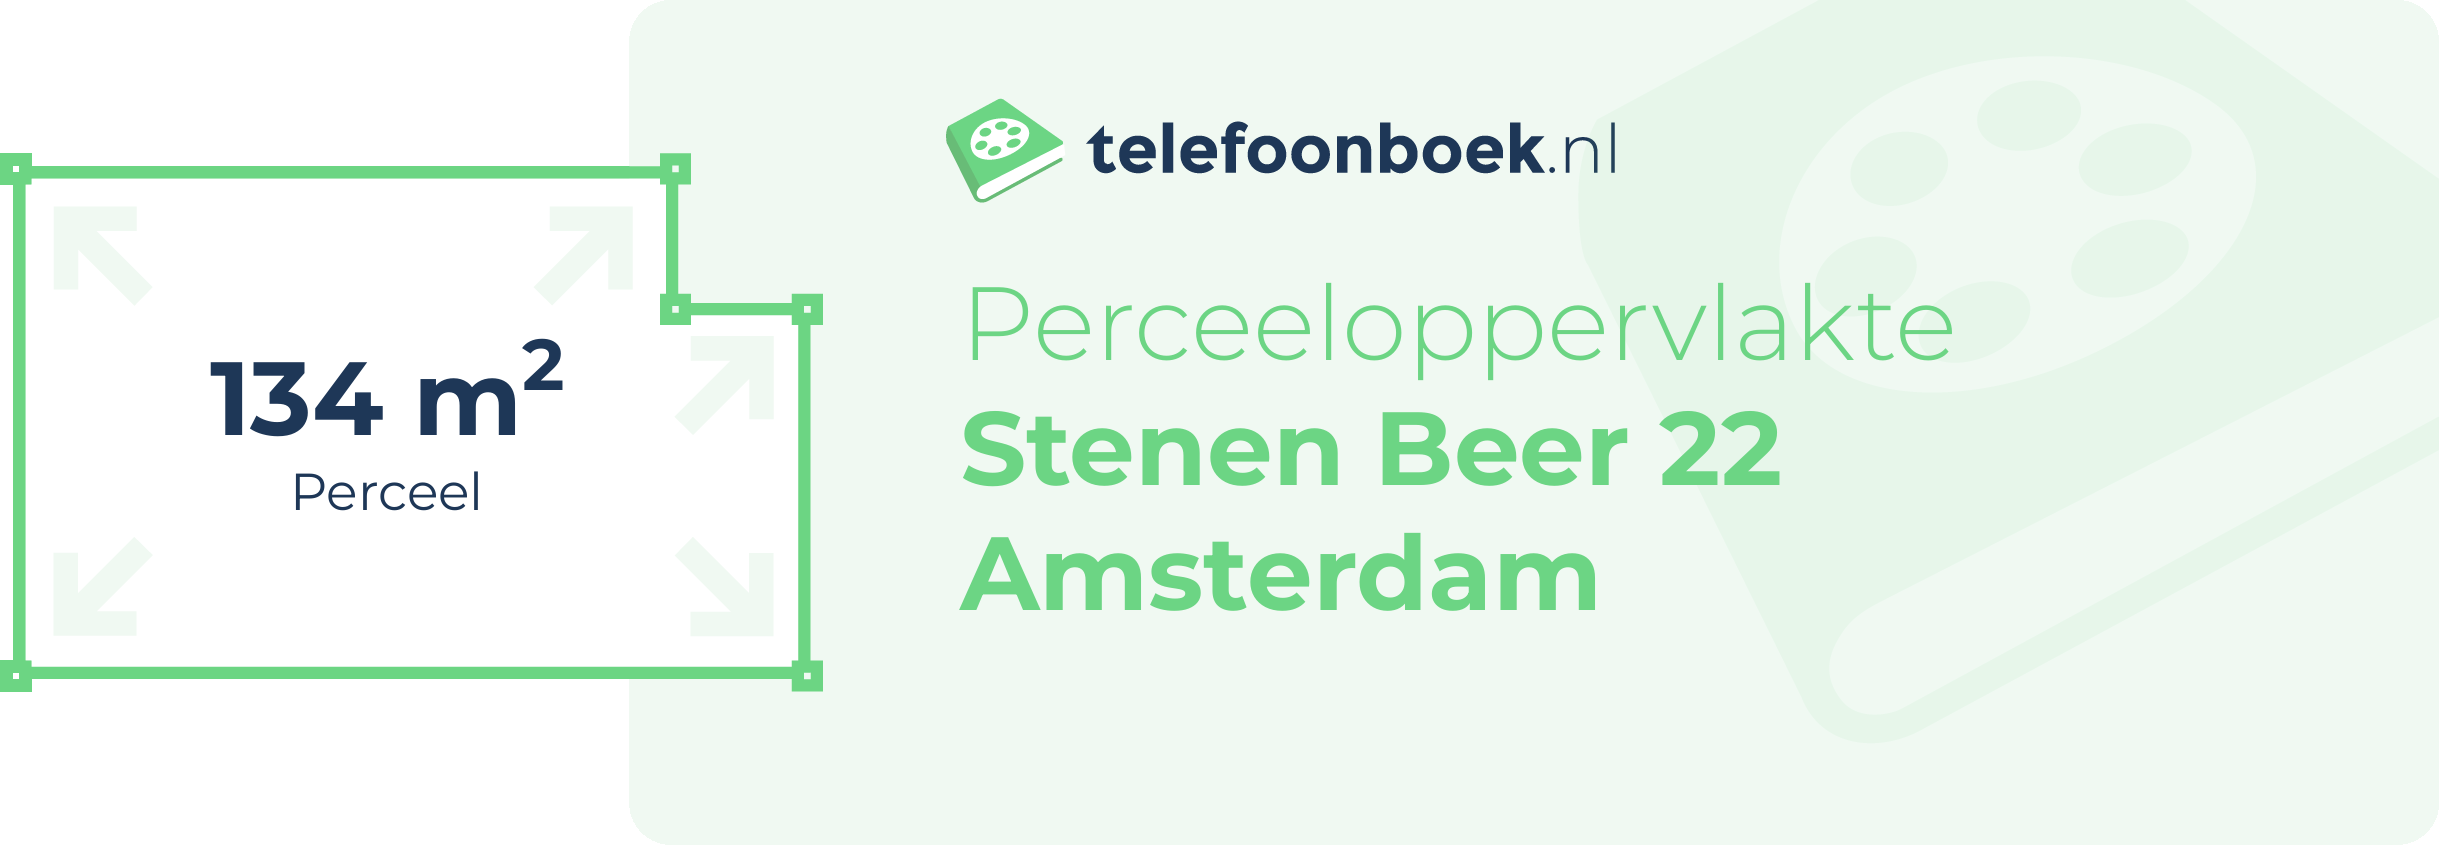 Perceeloppervlakte Stenen Beer 22 Amsterdam